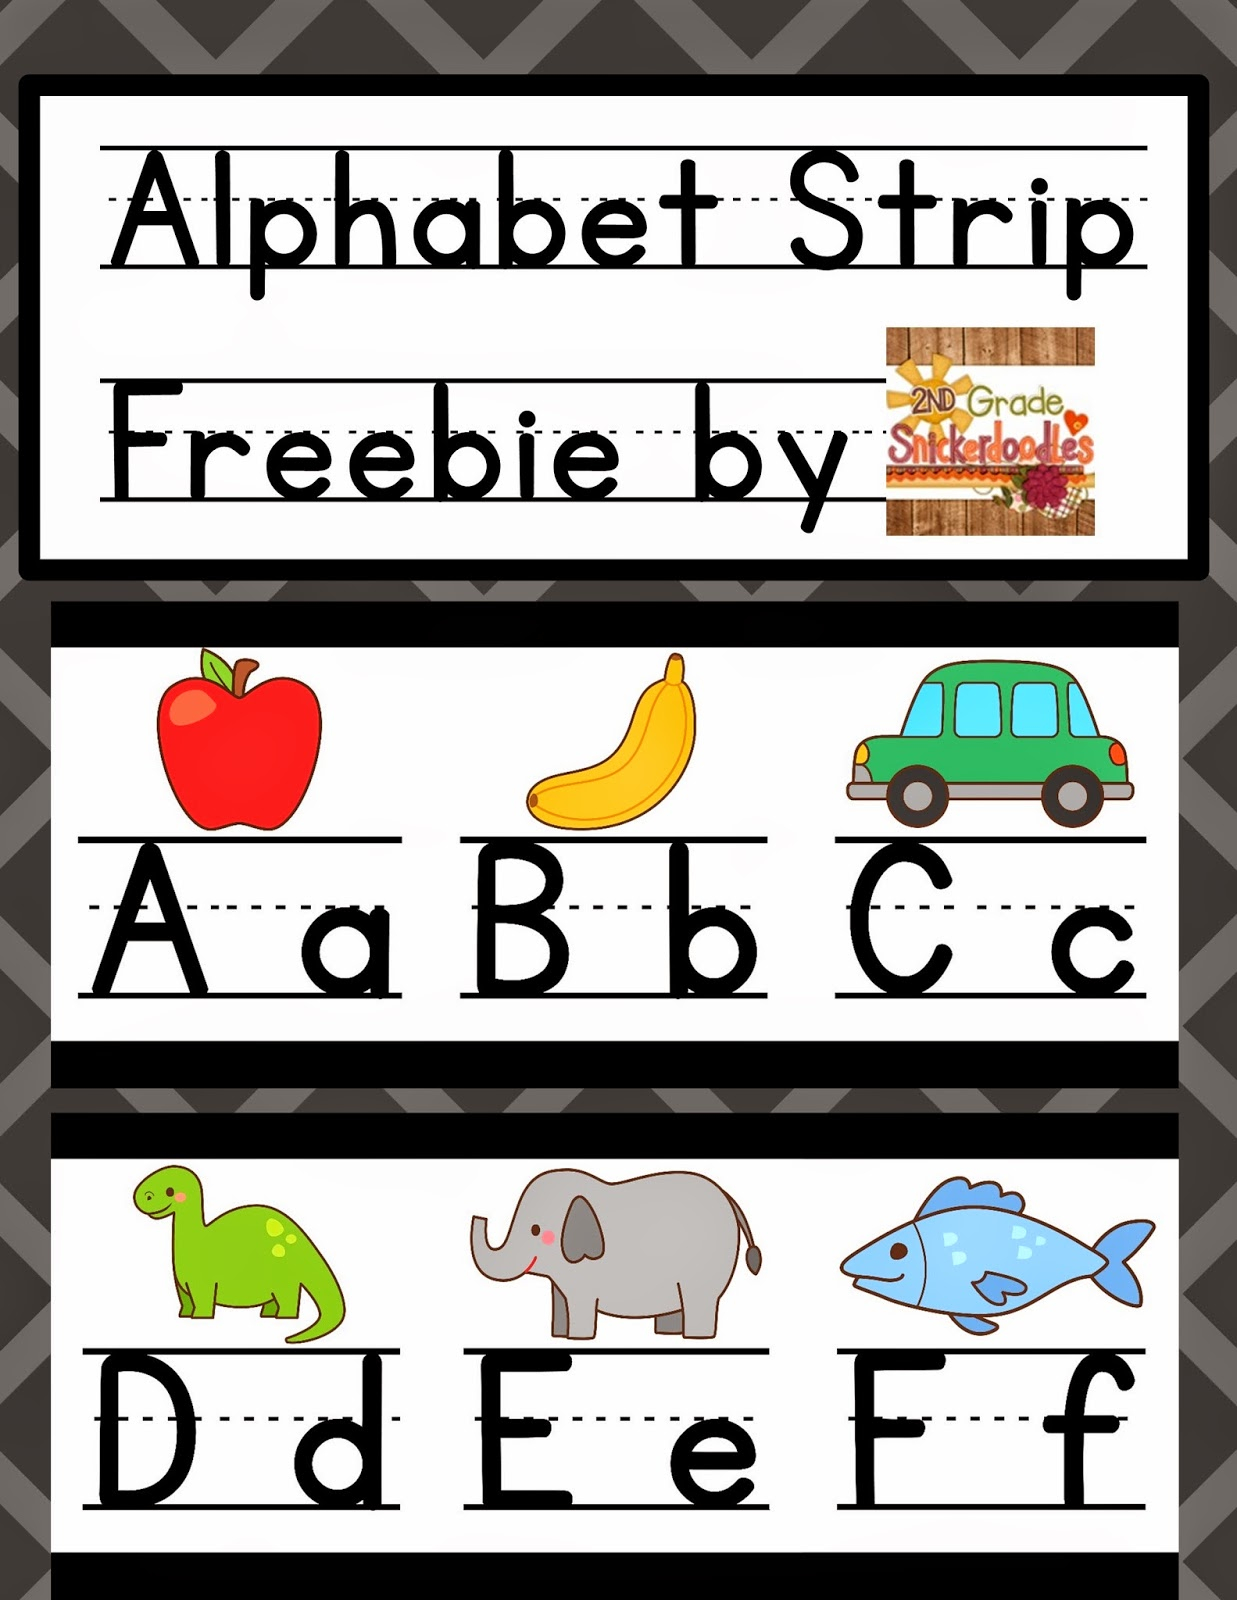 2nd Grade Snickerdoodles Alphabet Strip Posters FREEBIE